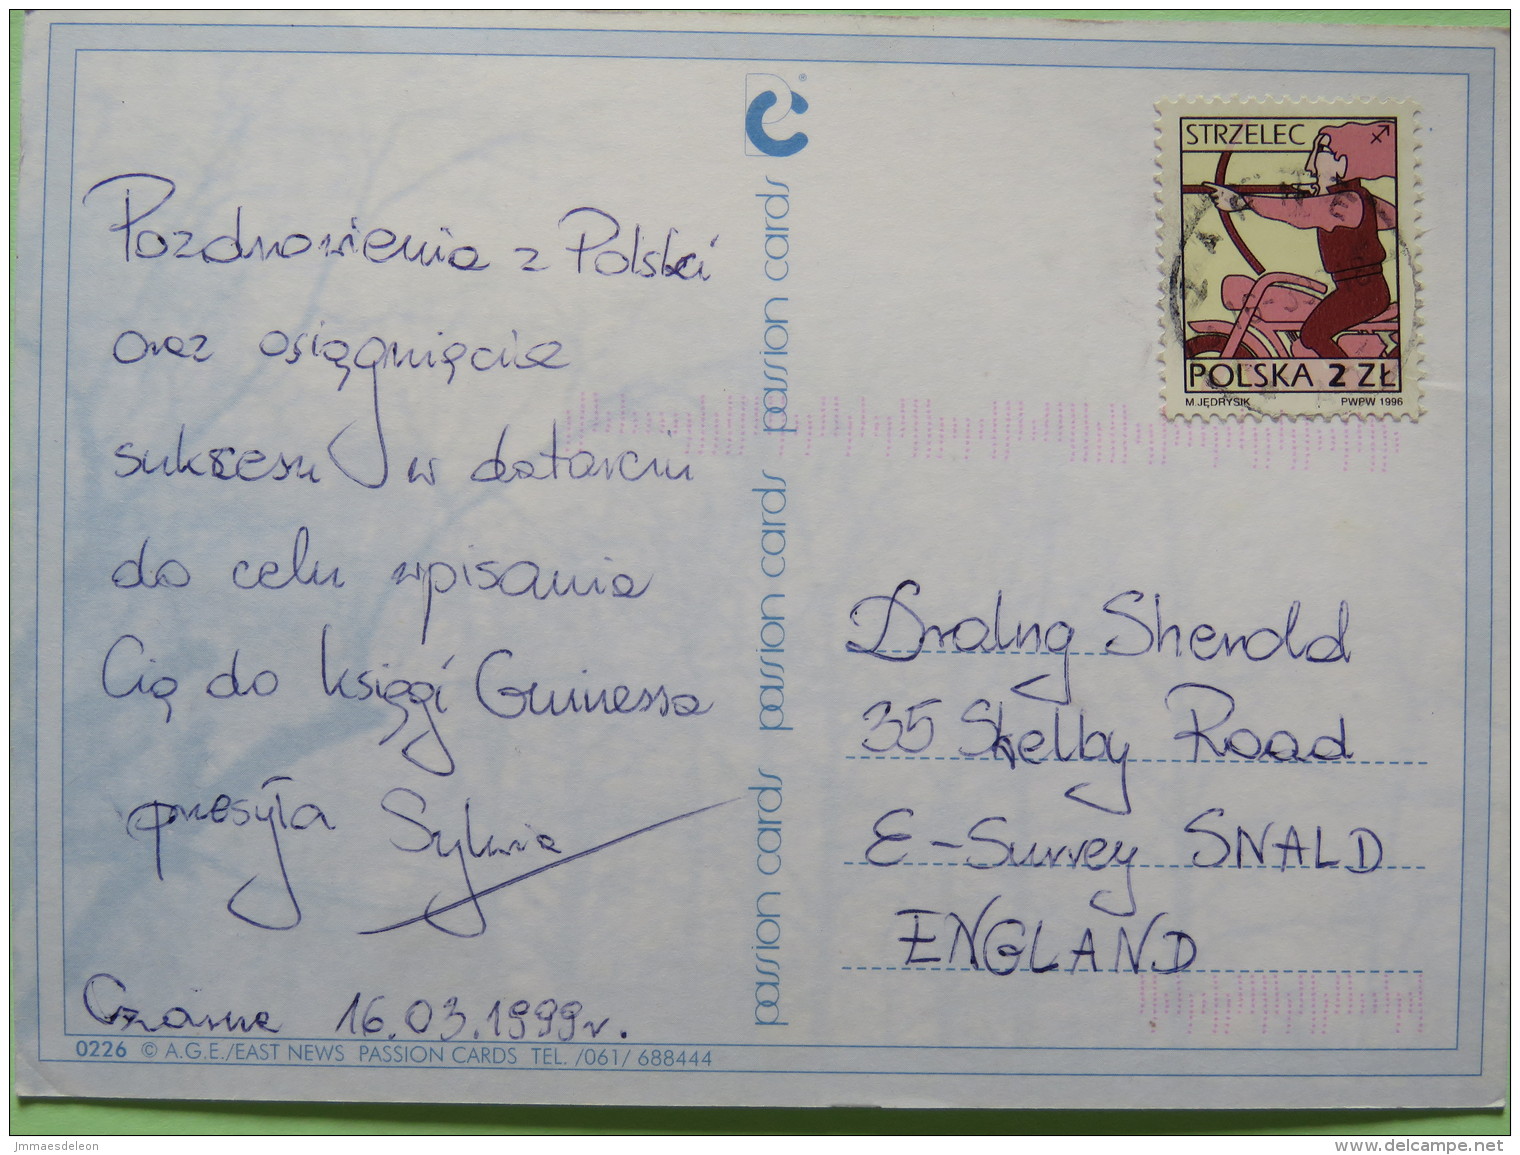 Poland 1999 Postcard ""baby"" Zakopane To England - Zodiac Sagittarius With Bow And Motorcycle - Poland